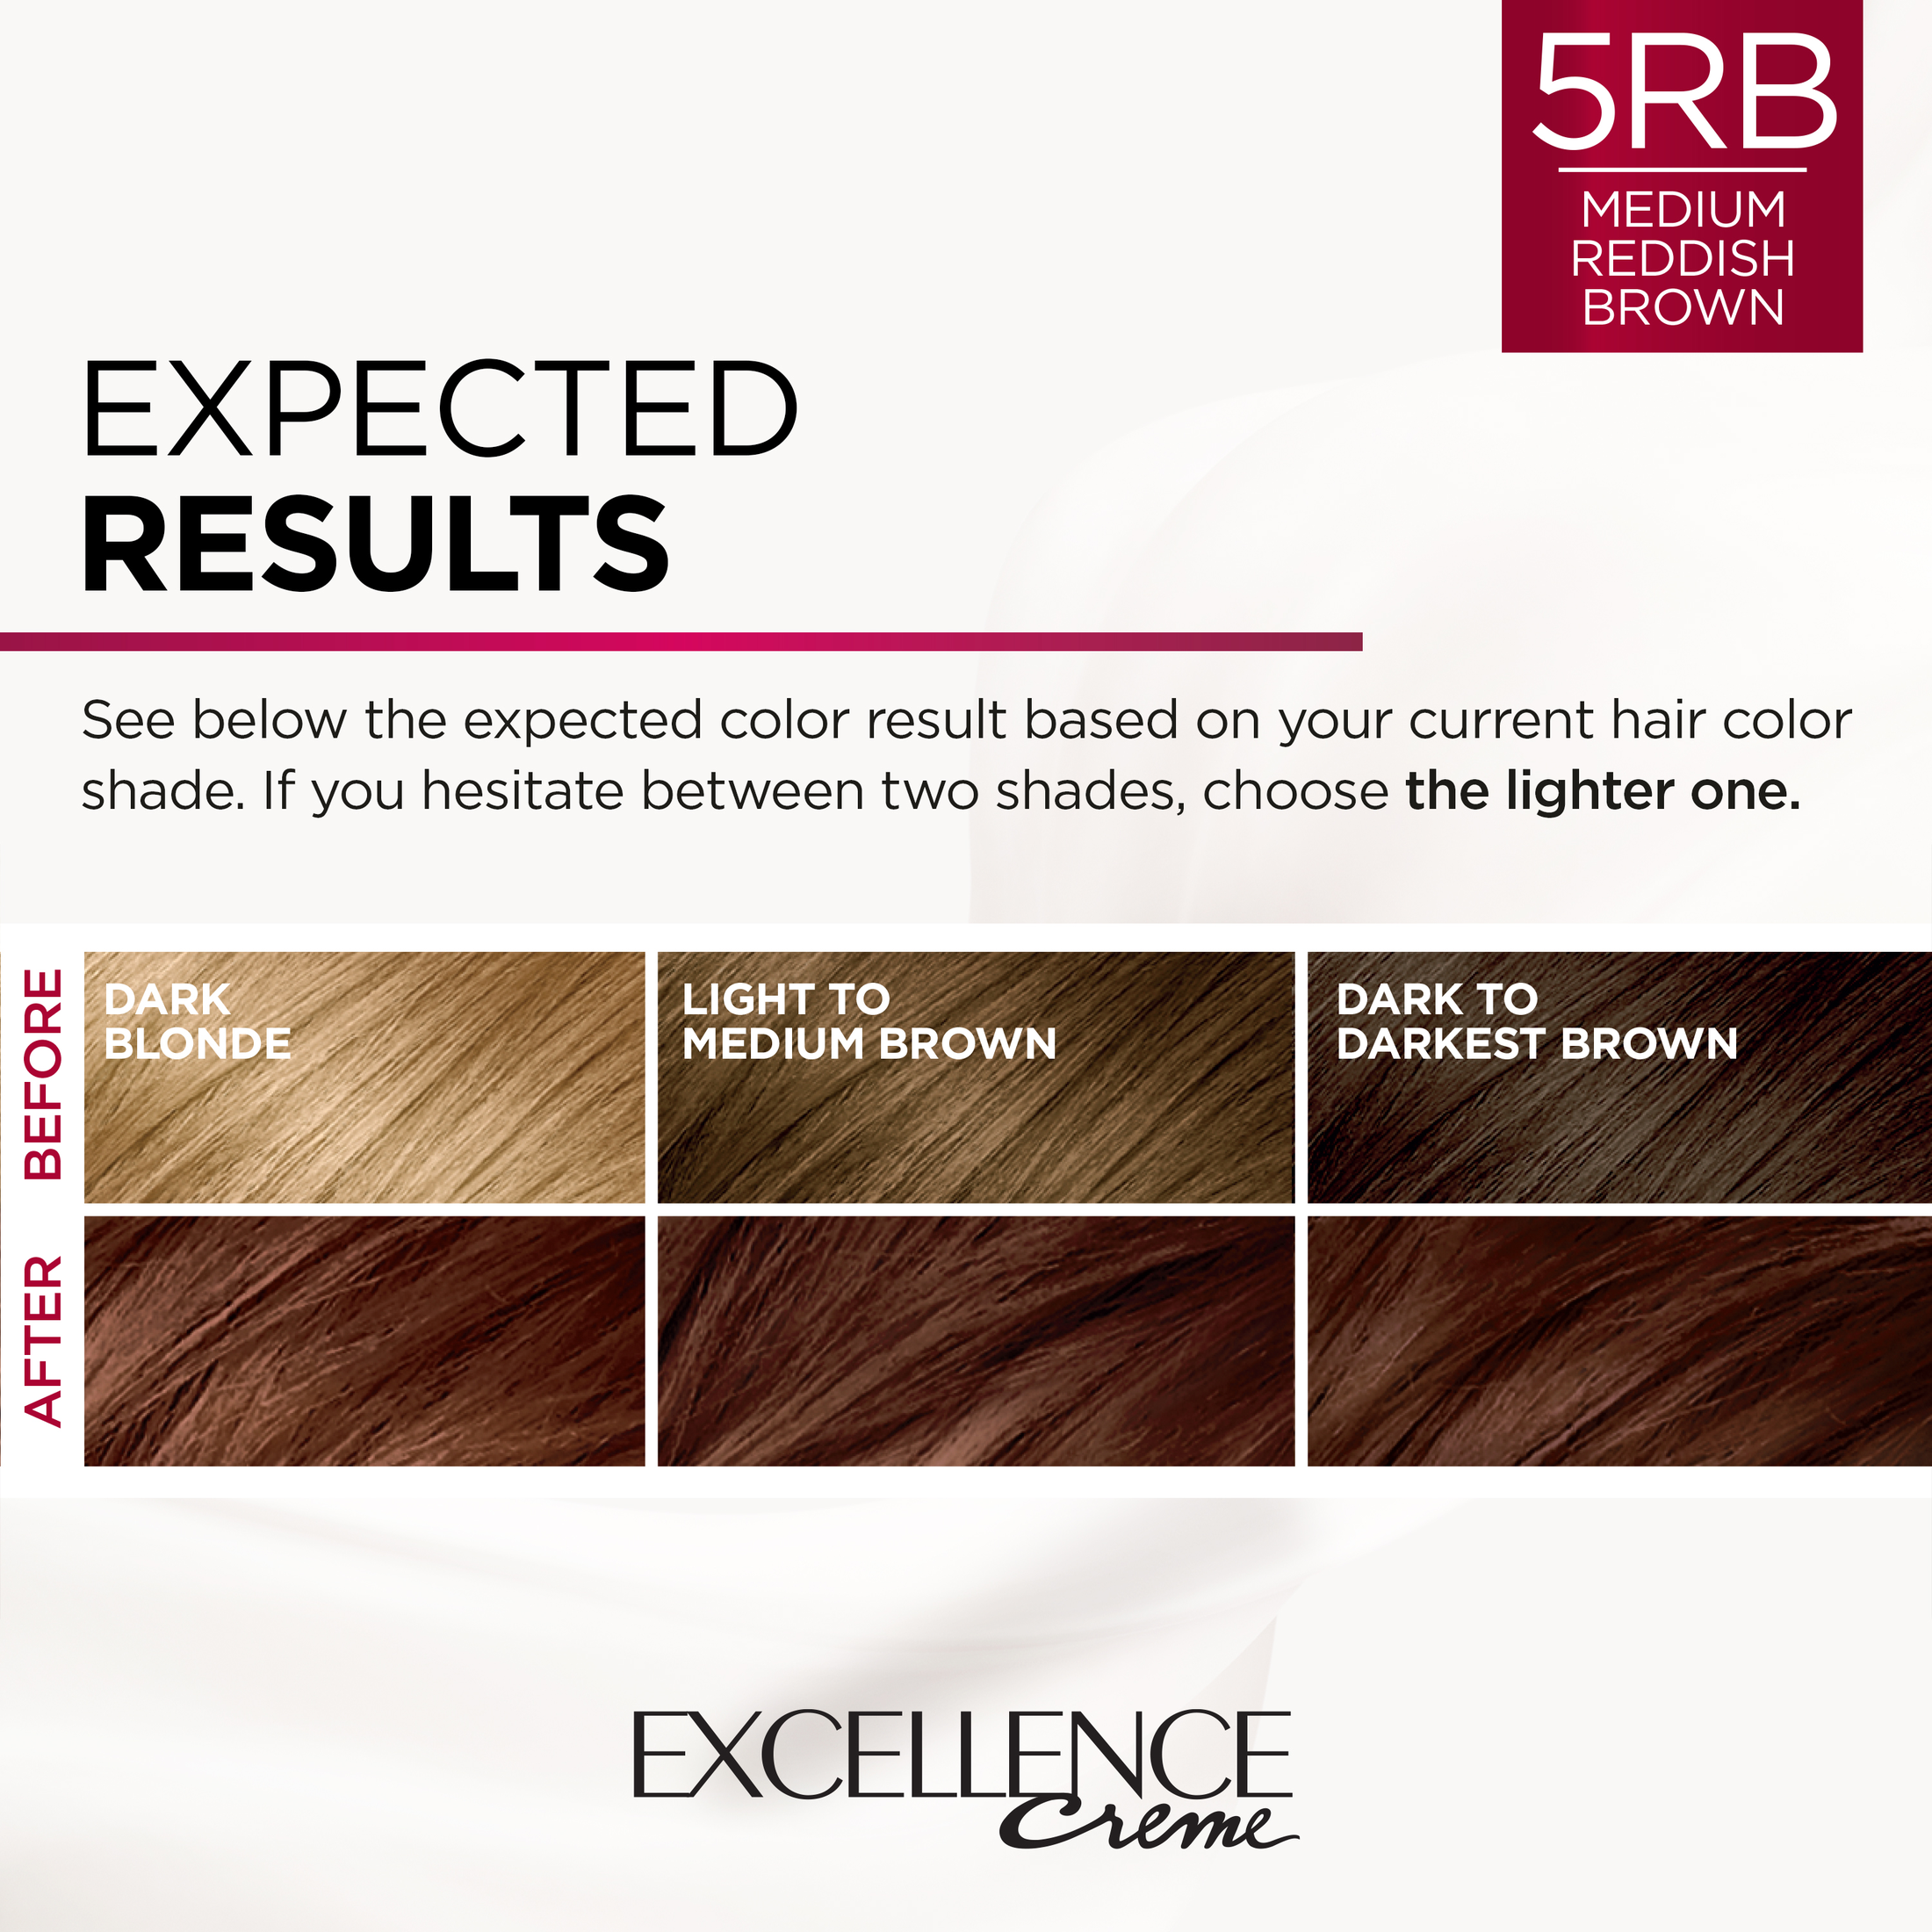 L'Oreal Paris Excellence Creme Permanent Hair Color, 5RB Medium Reddish Brown - image 5 of 9